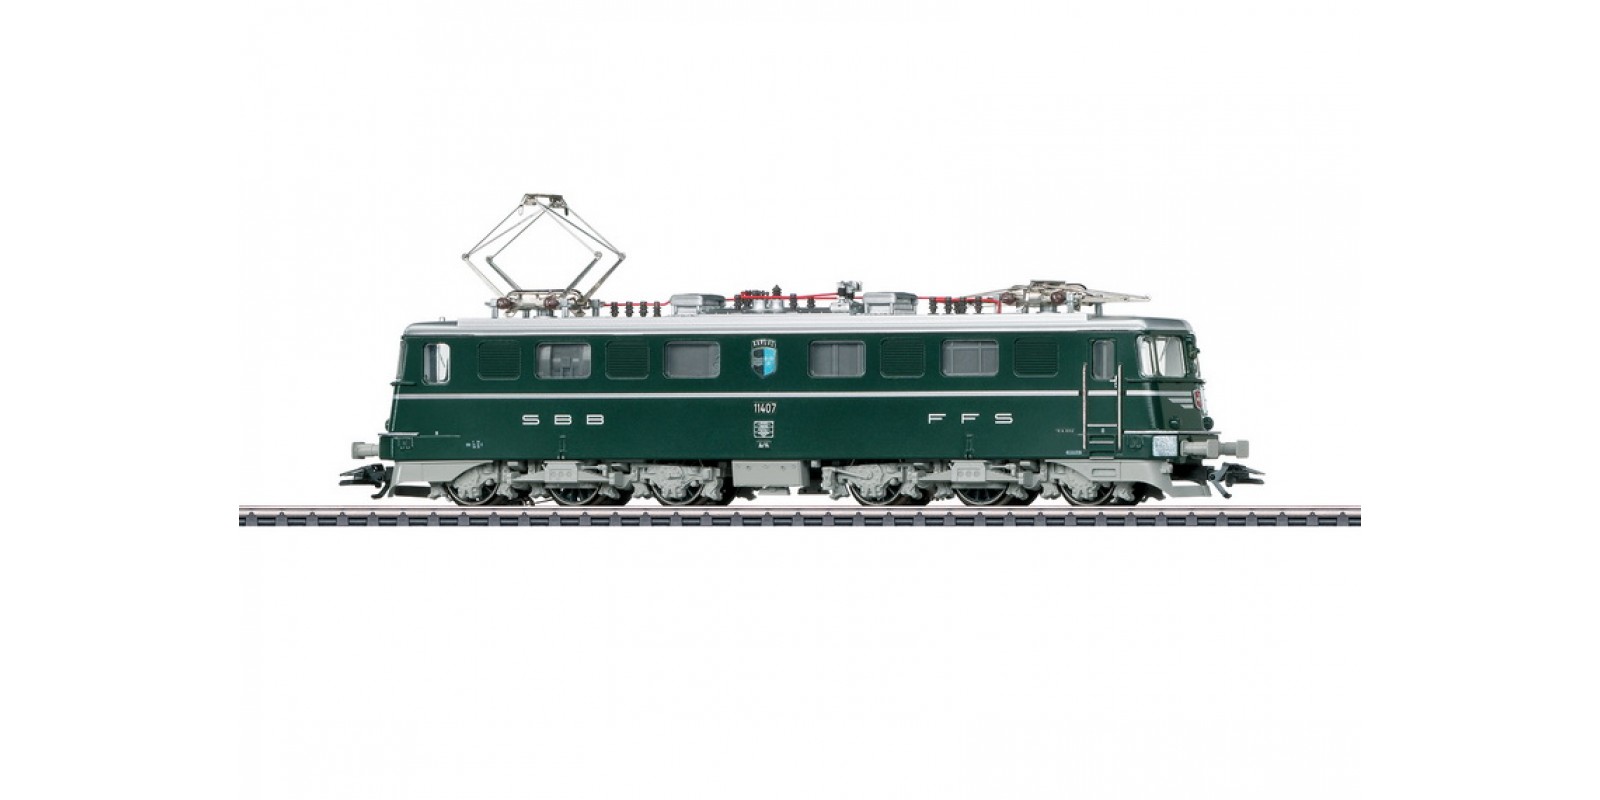 39364 Class Ae 6/6 Electric Locomotive